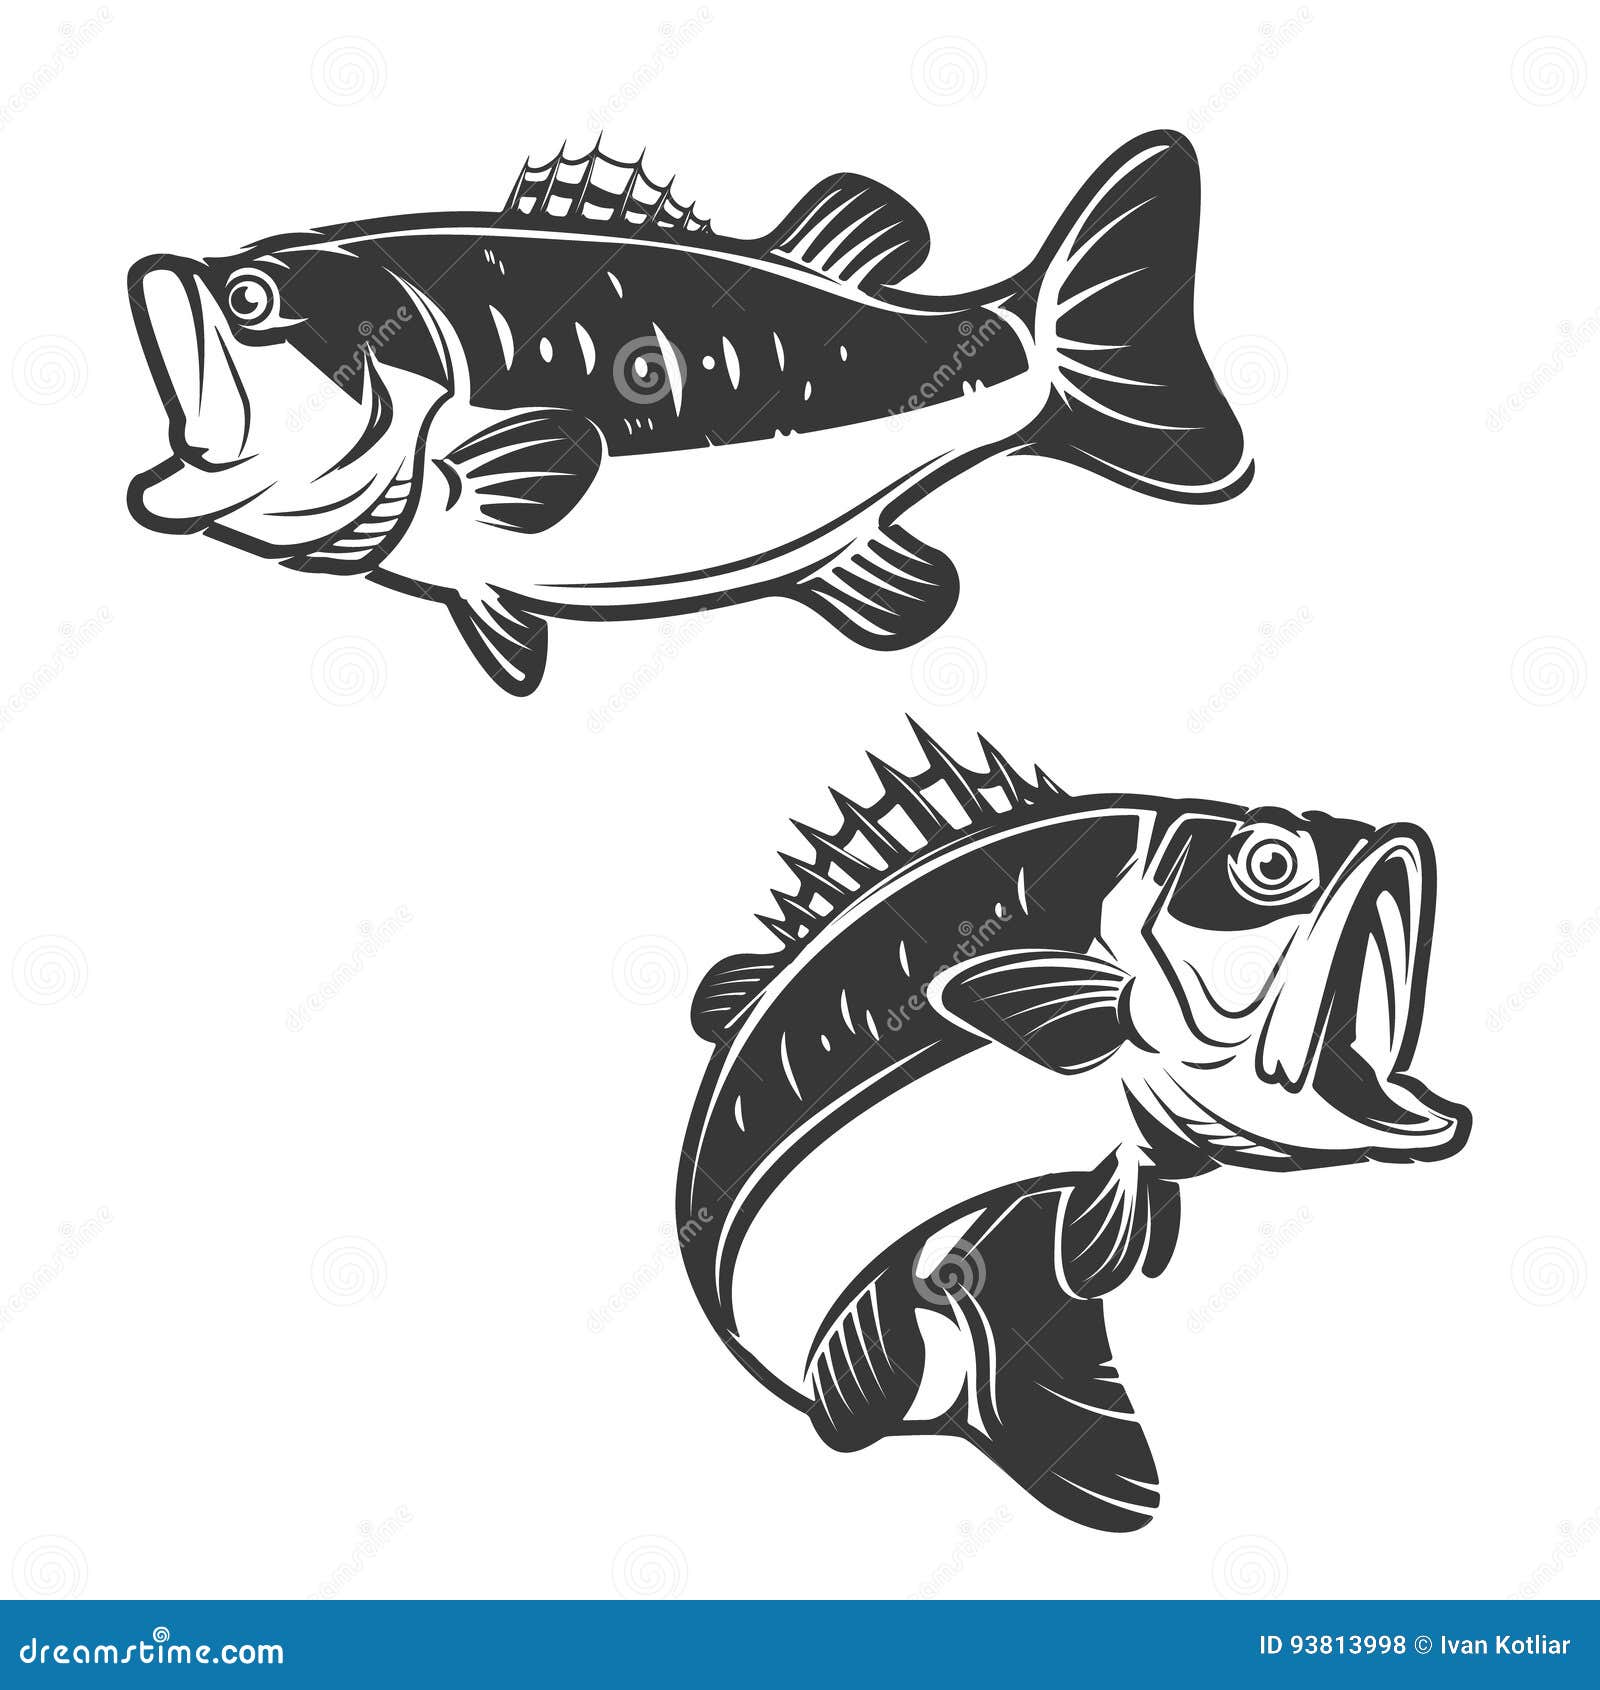 Fish tattoos - Fly Fishing - Maine Fly Fish